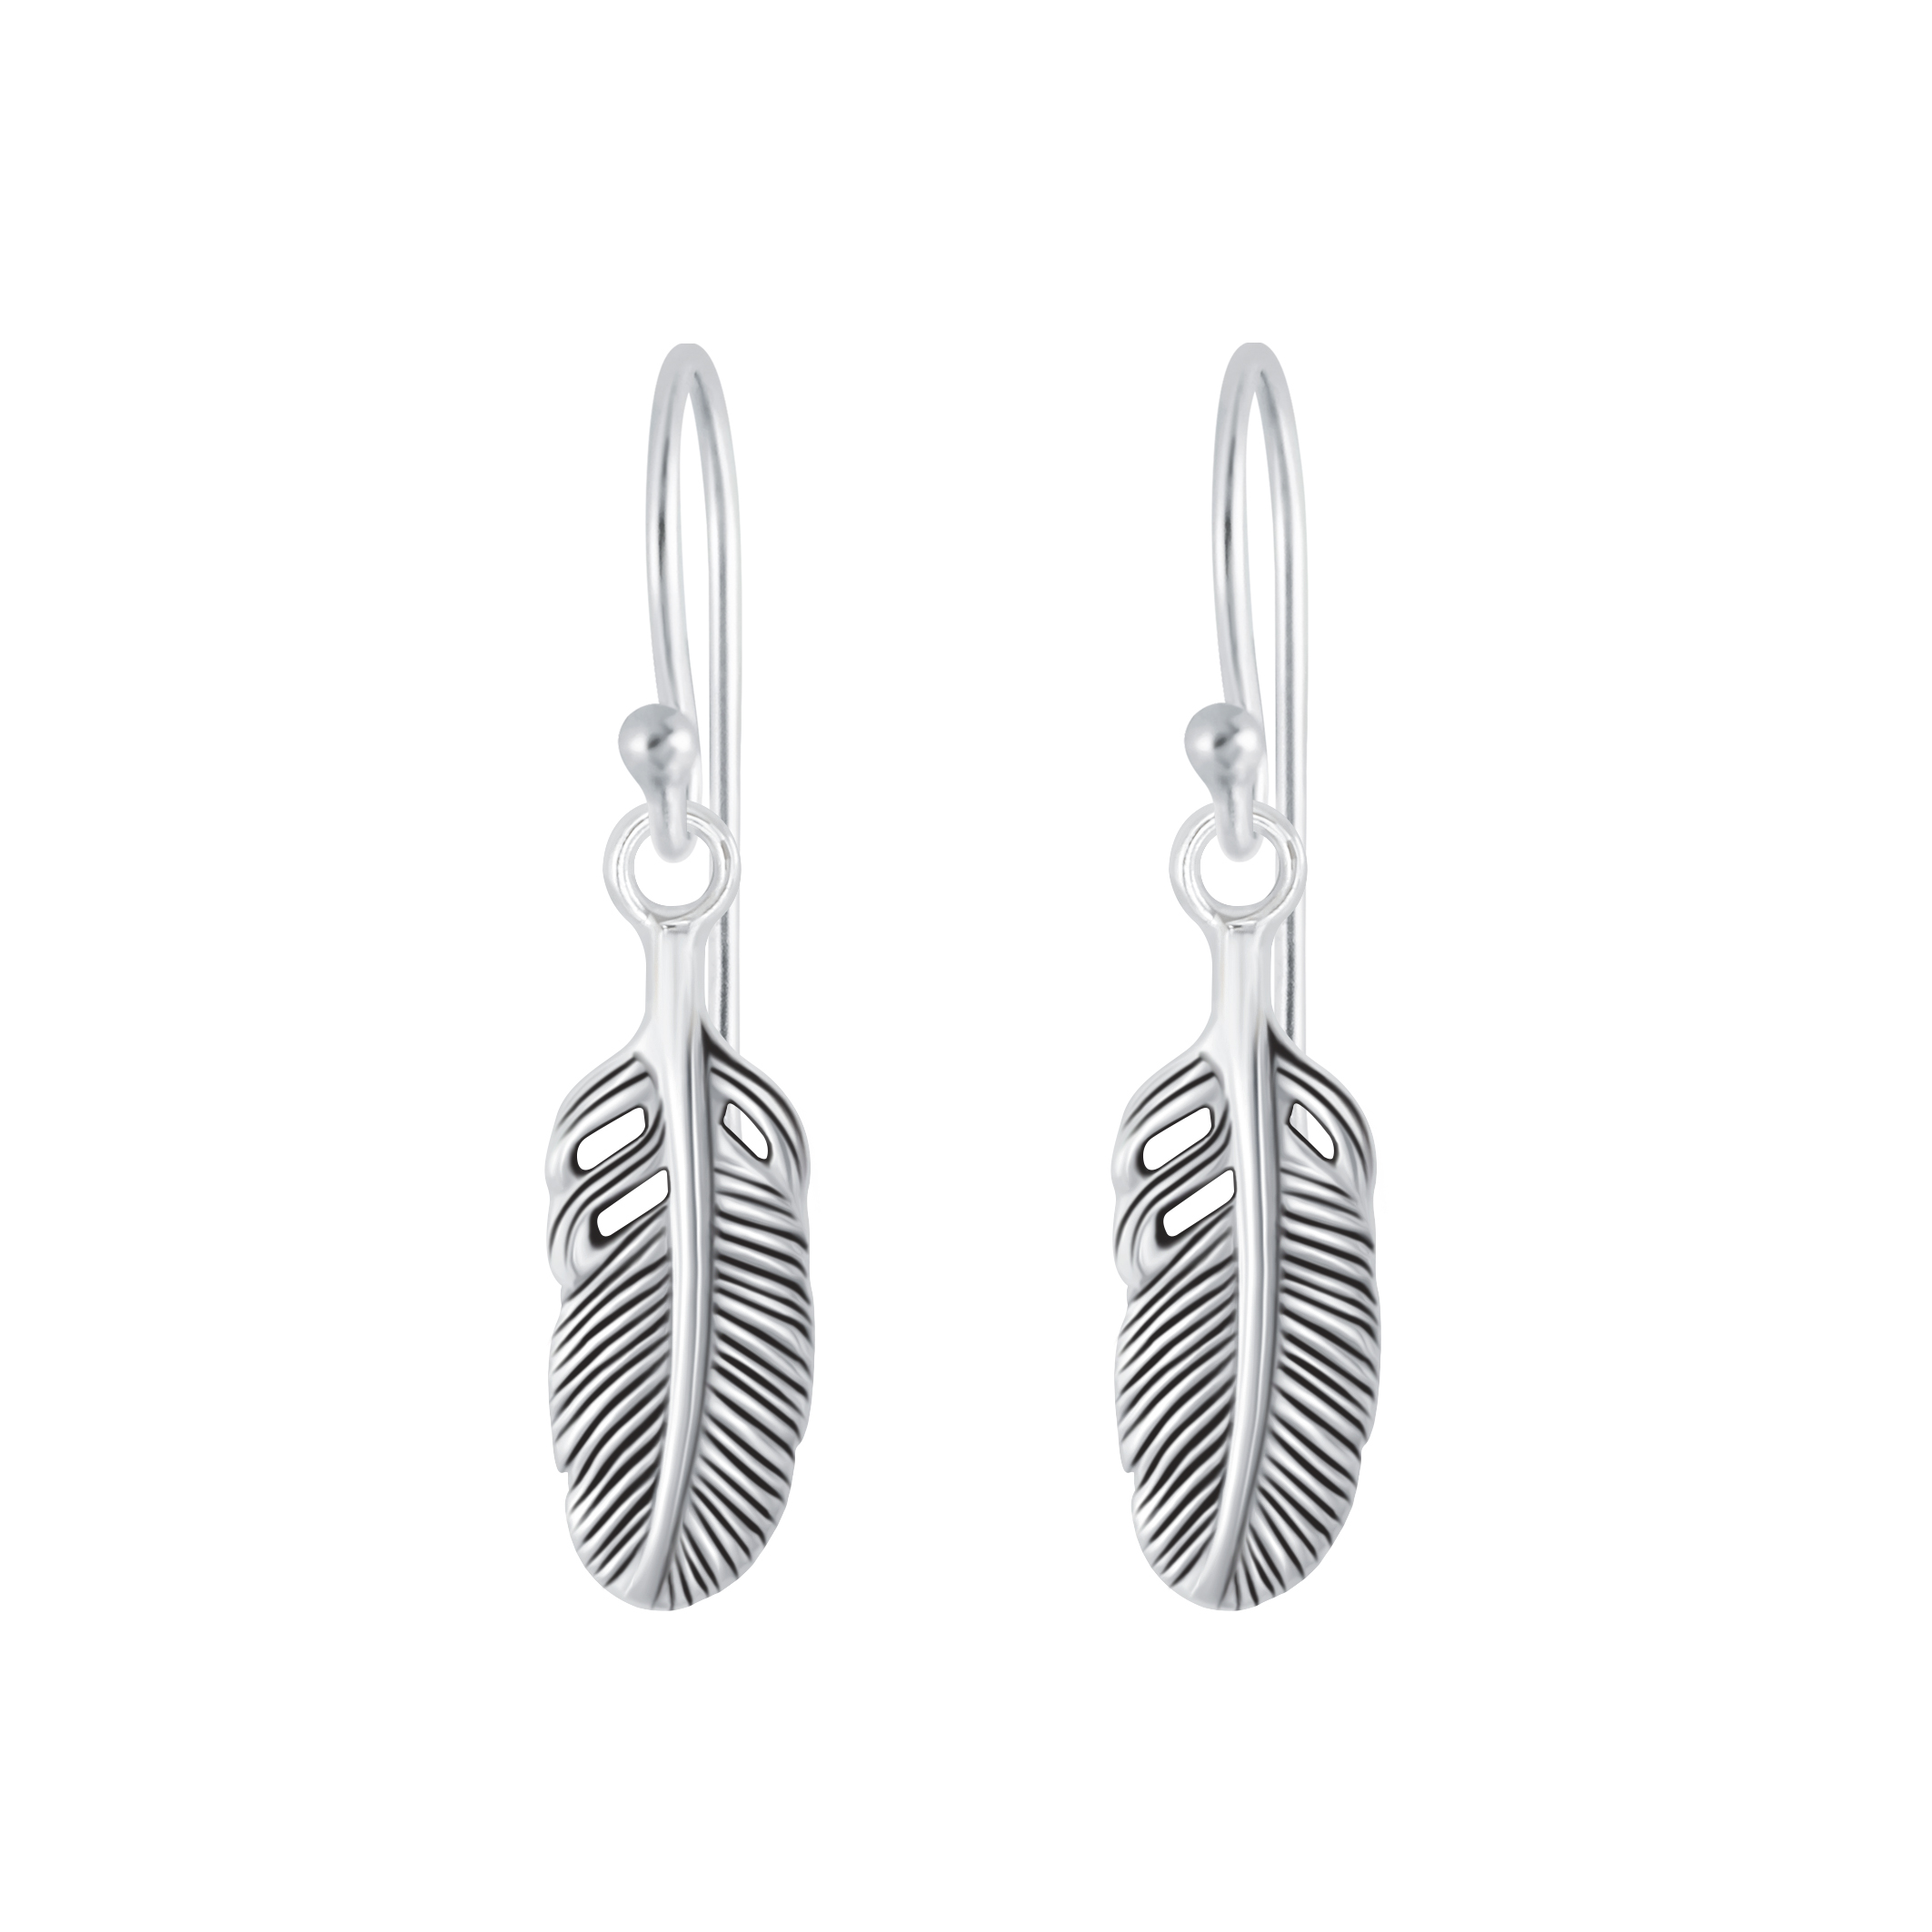 Feather sterling silver earrings